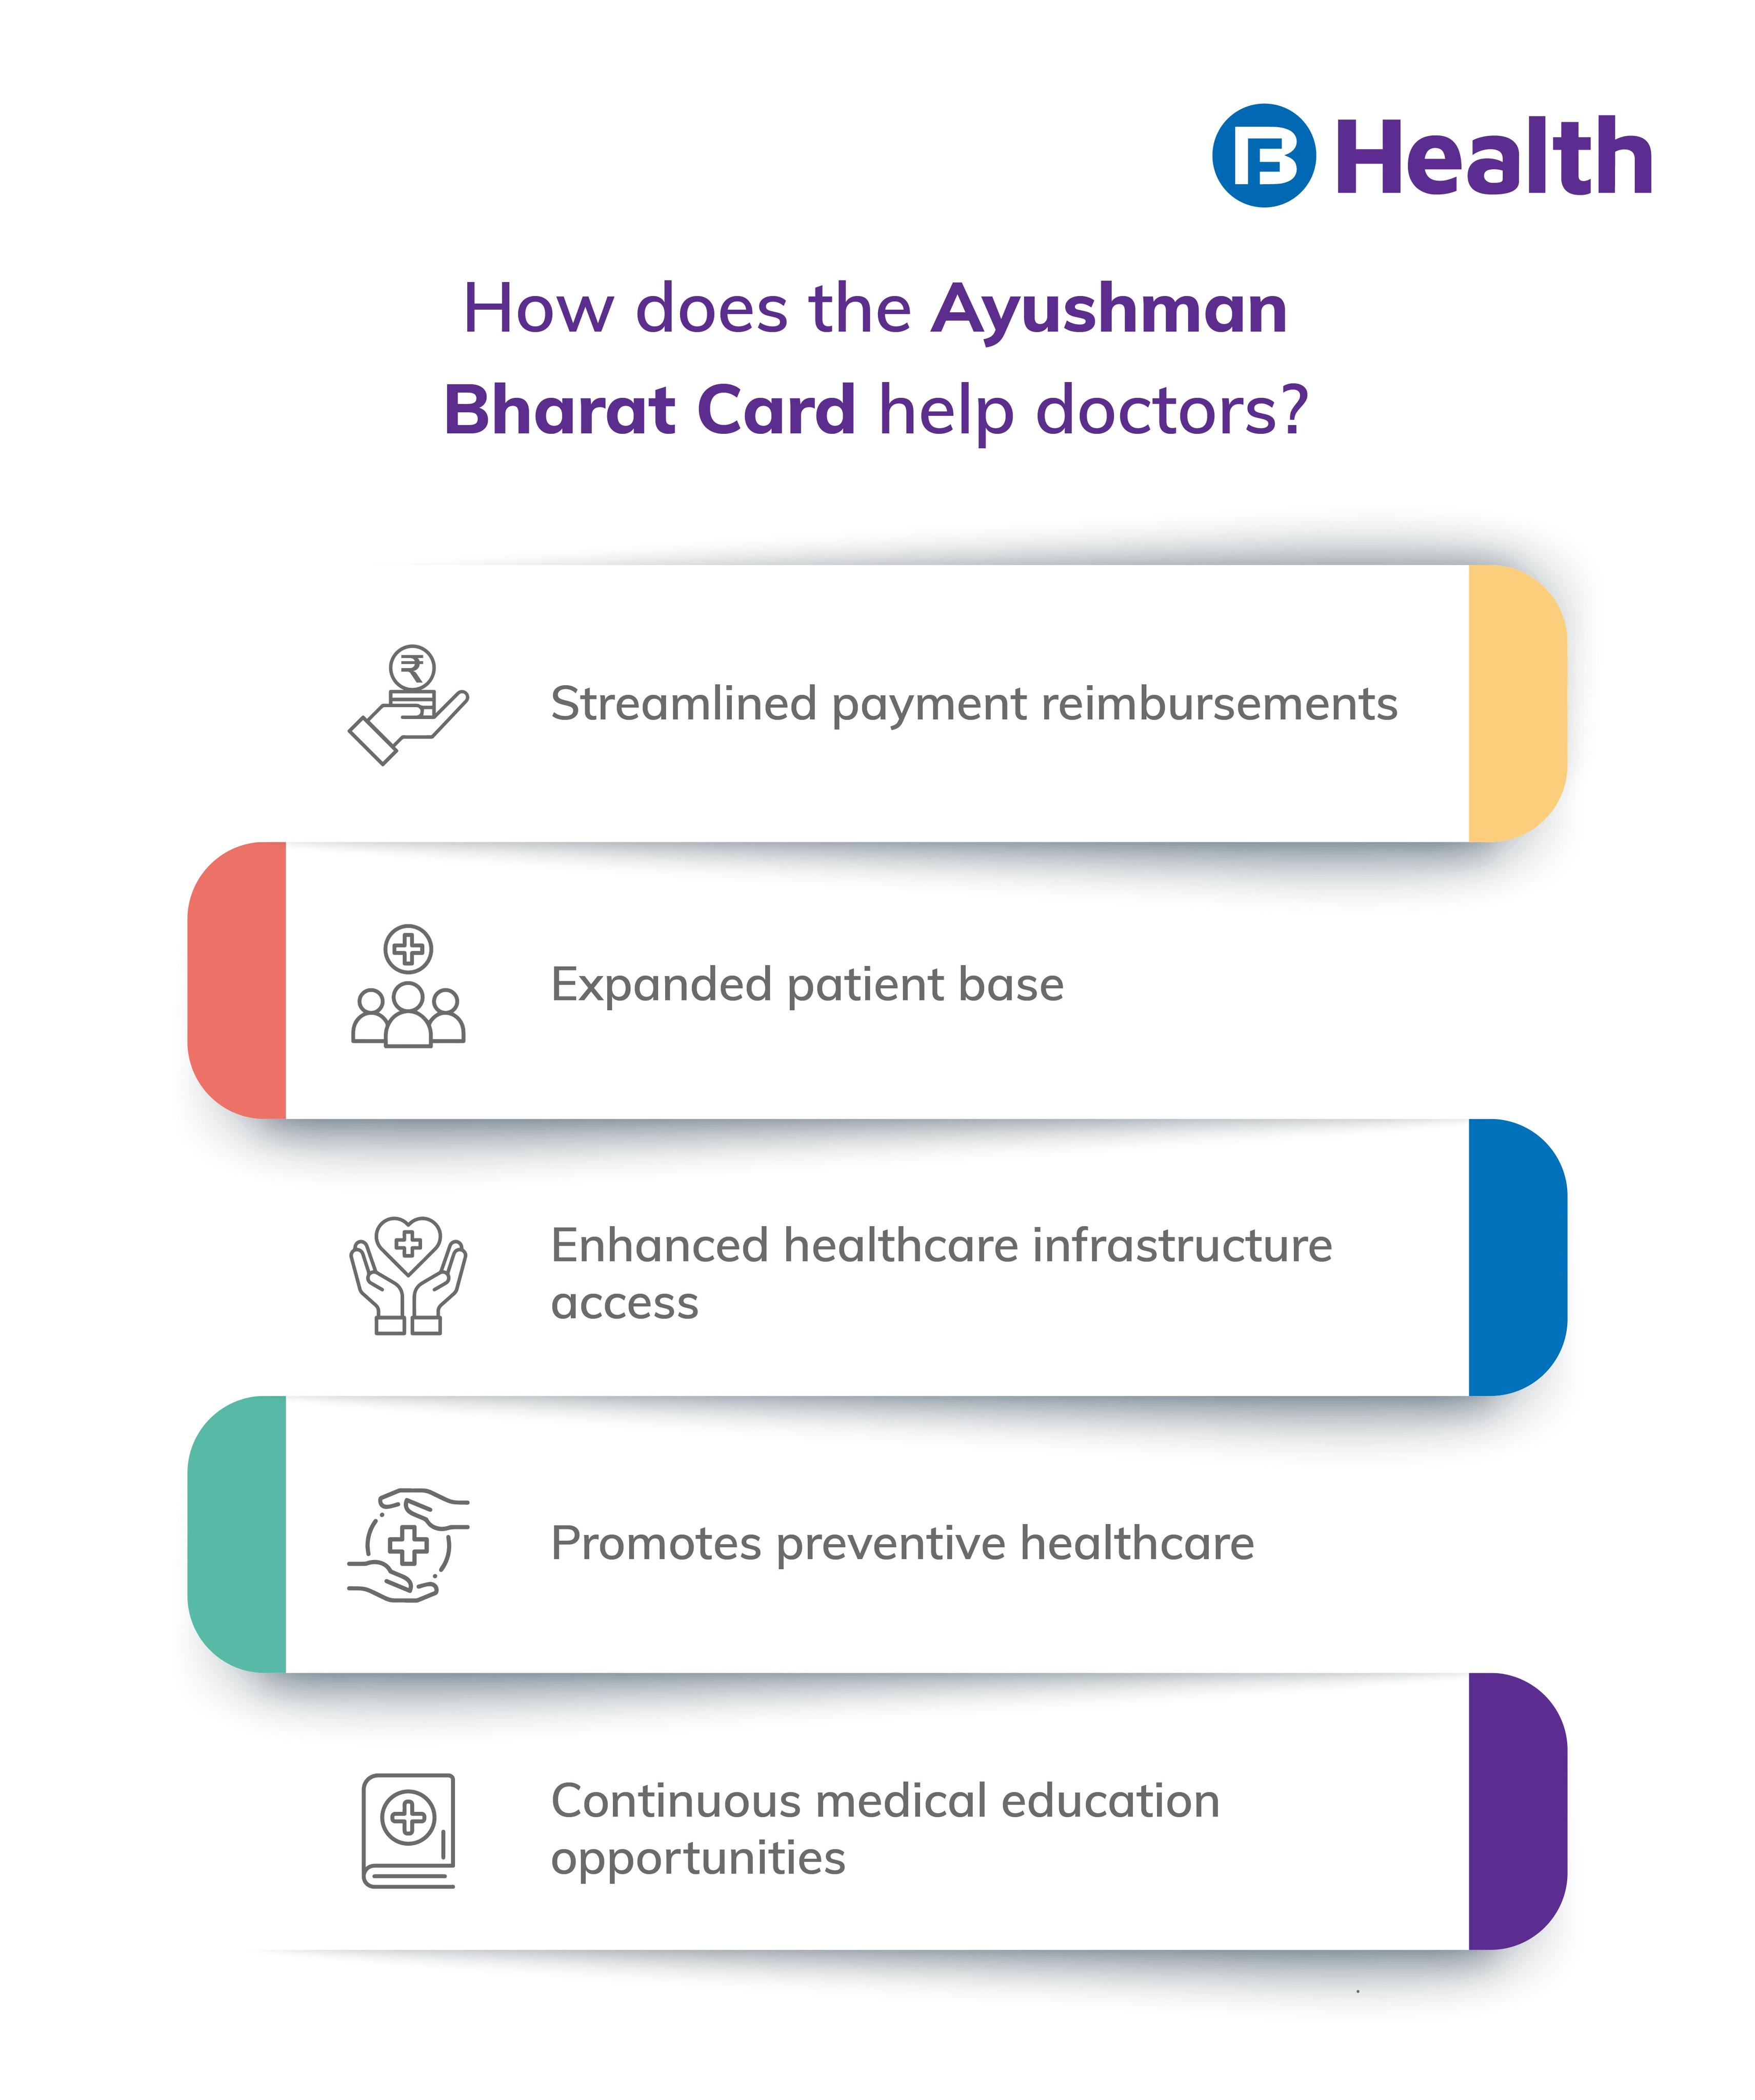 Ayushman Bharat Card for doctors